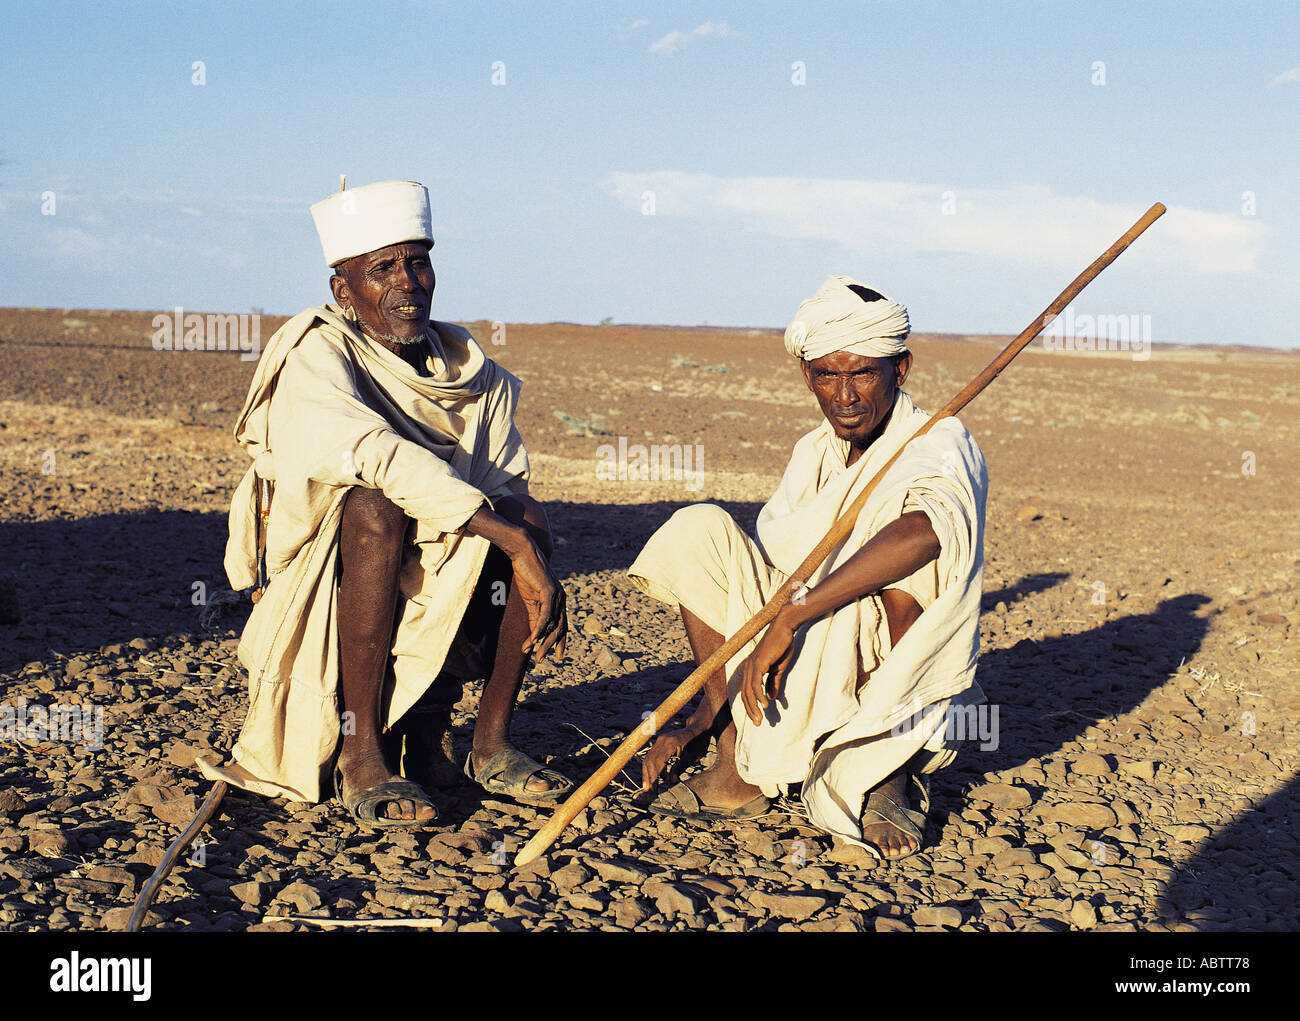 Two Gabbra men sitting and chatting Chalbi Desert northern Kenya Stock Photo